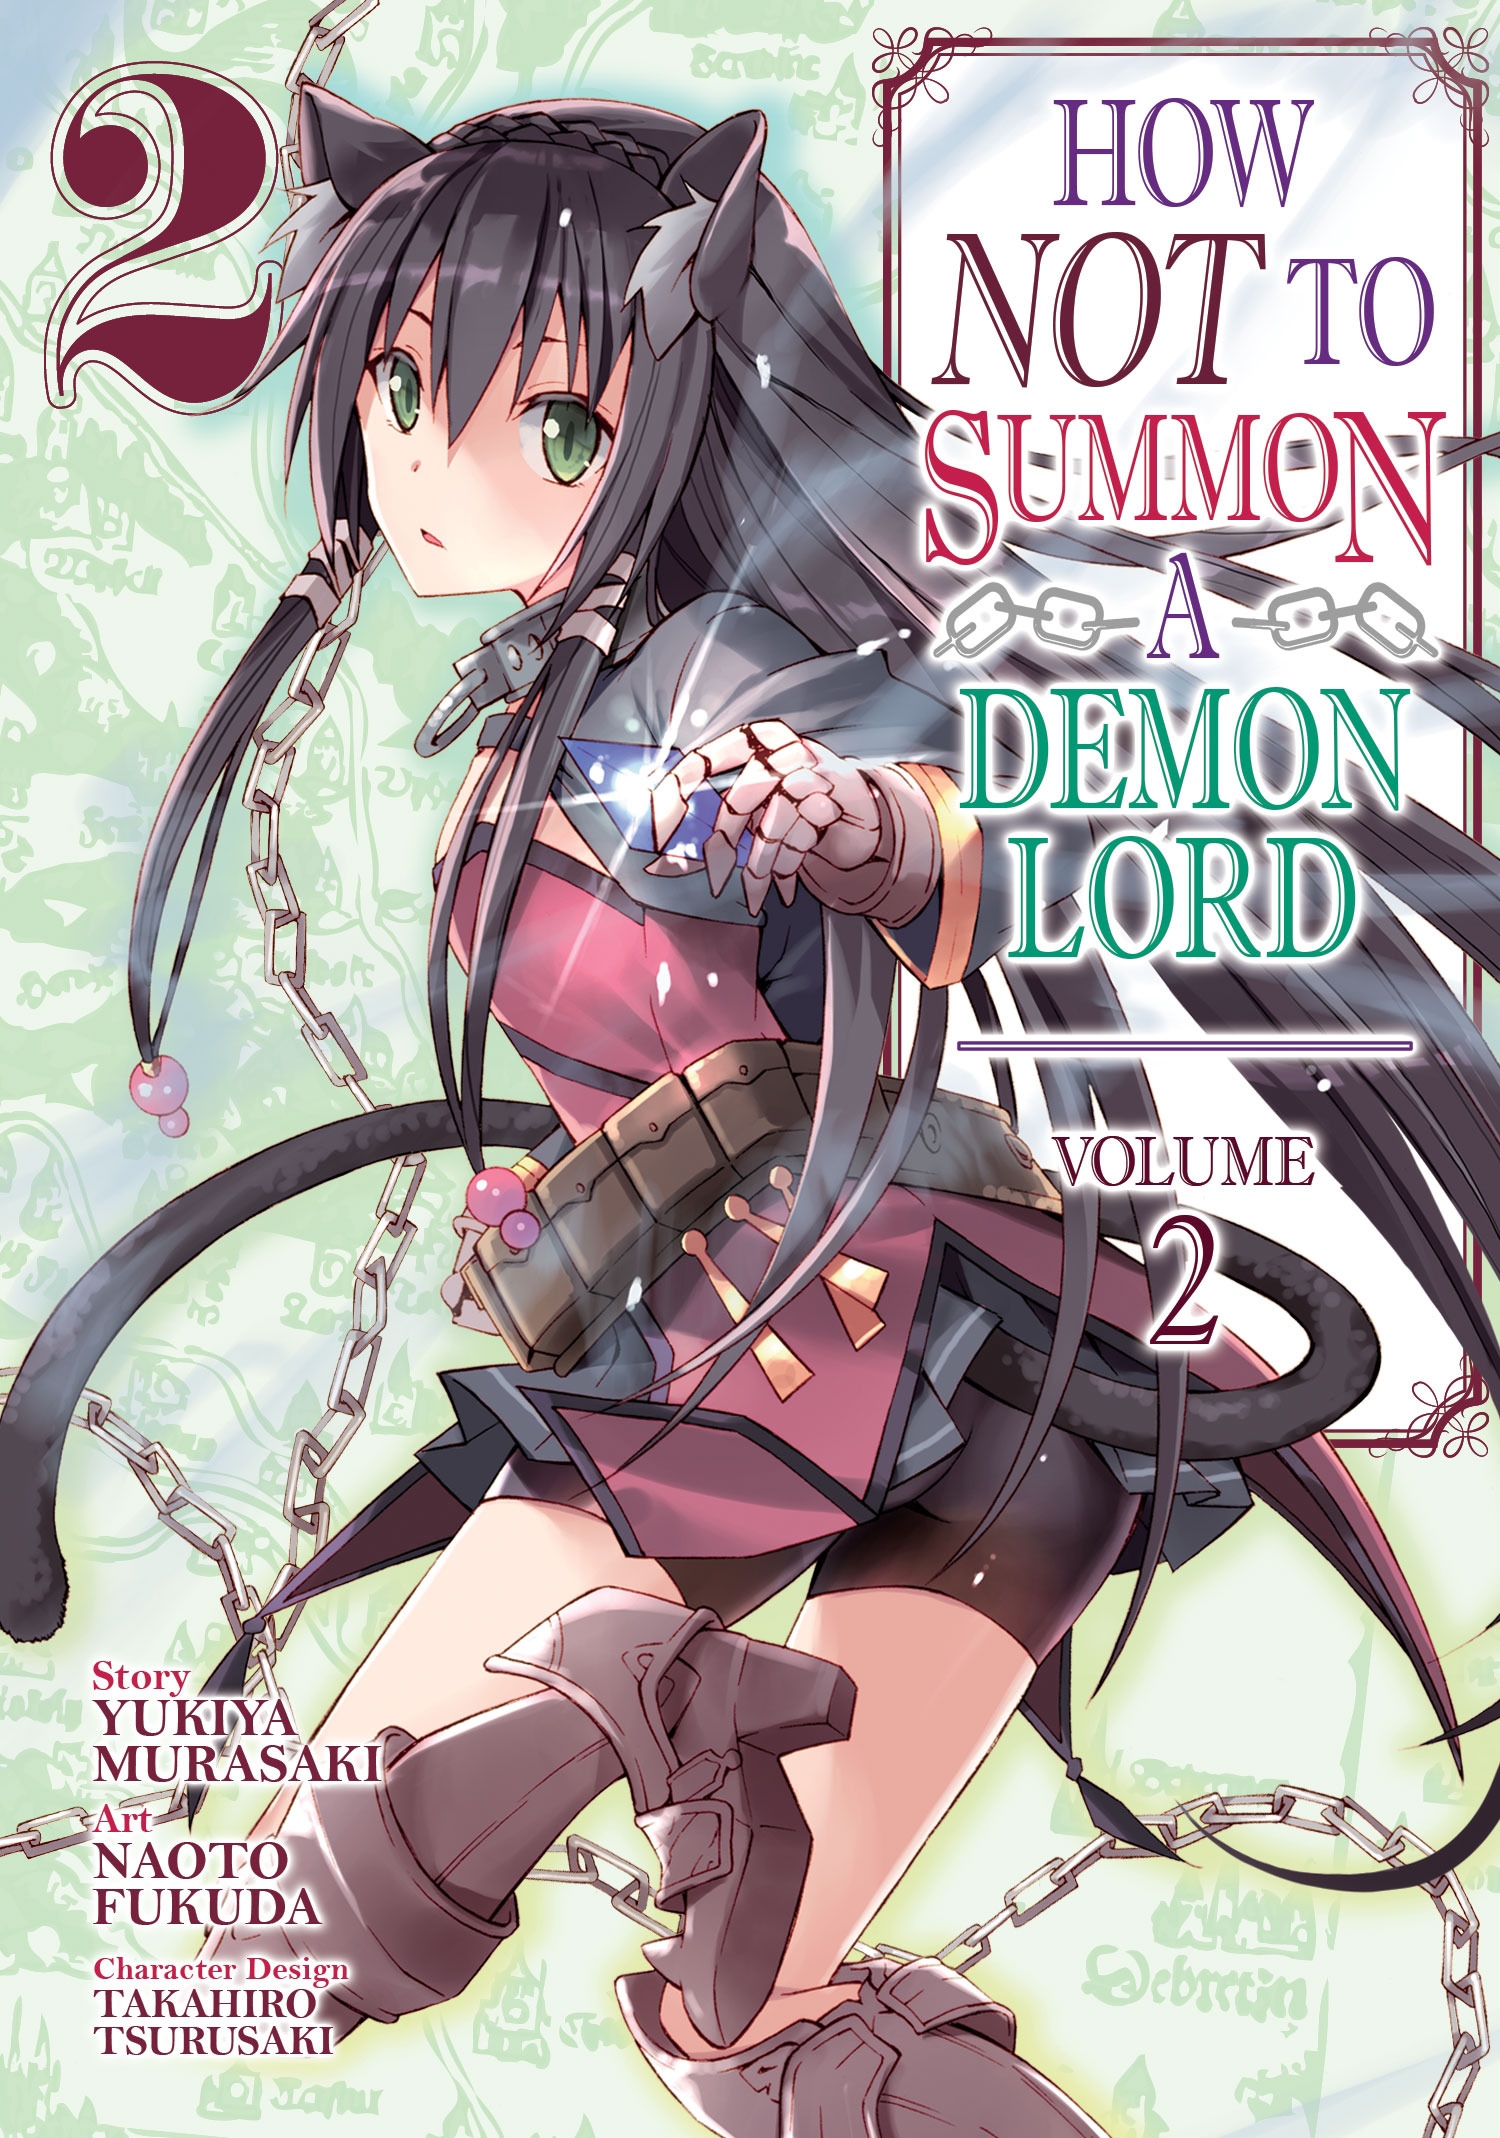 How NOT to a Demon Lord (Manga) Vol. 2 by Murasaki - Penguin Books Australia